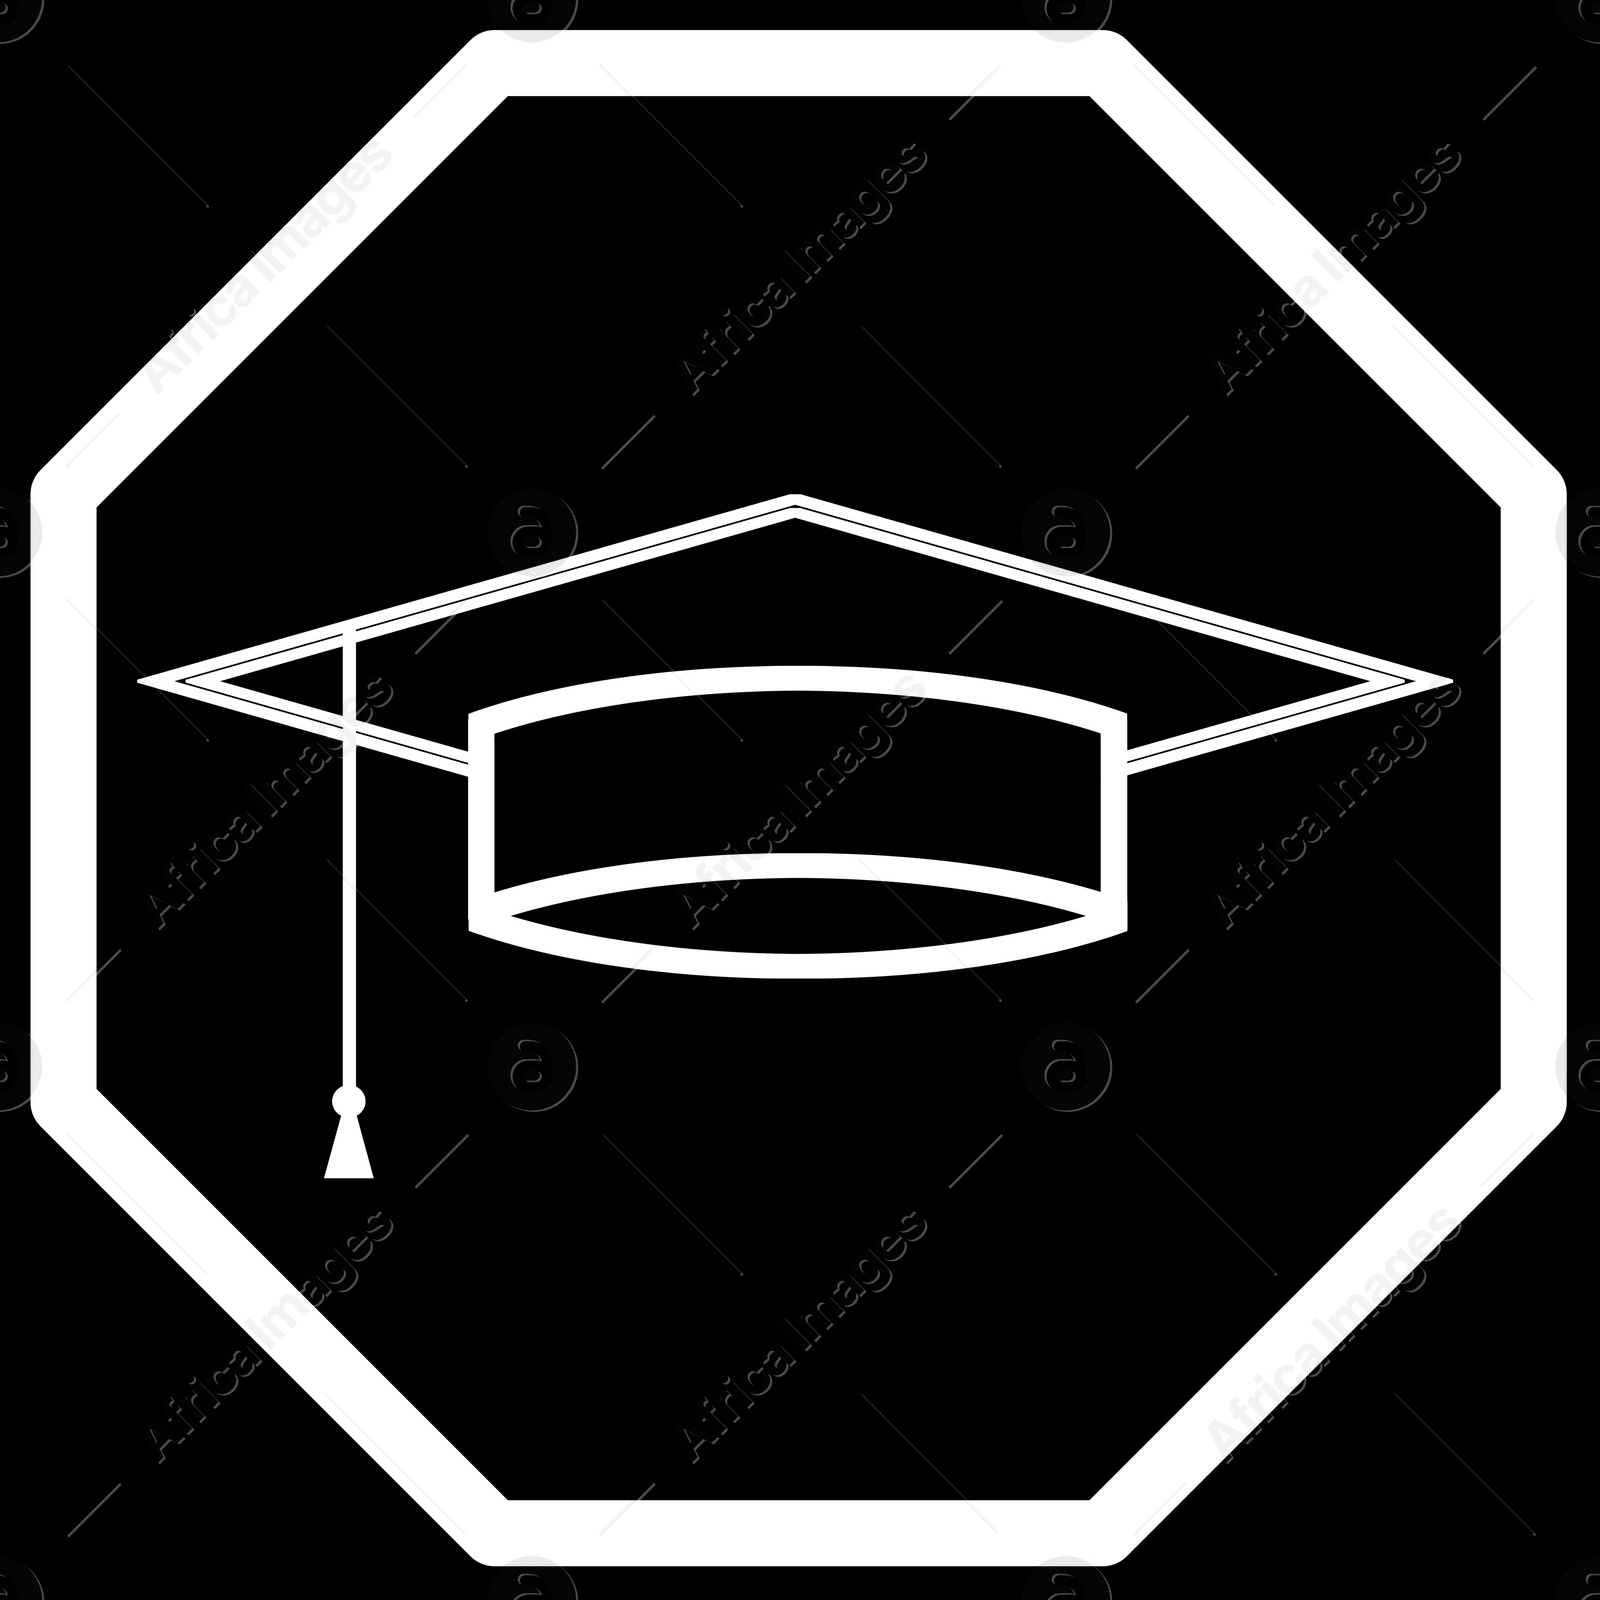 Image of Square academic cap in frame, illustration on black background